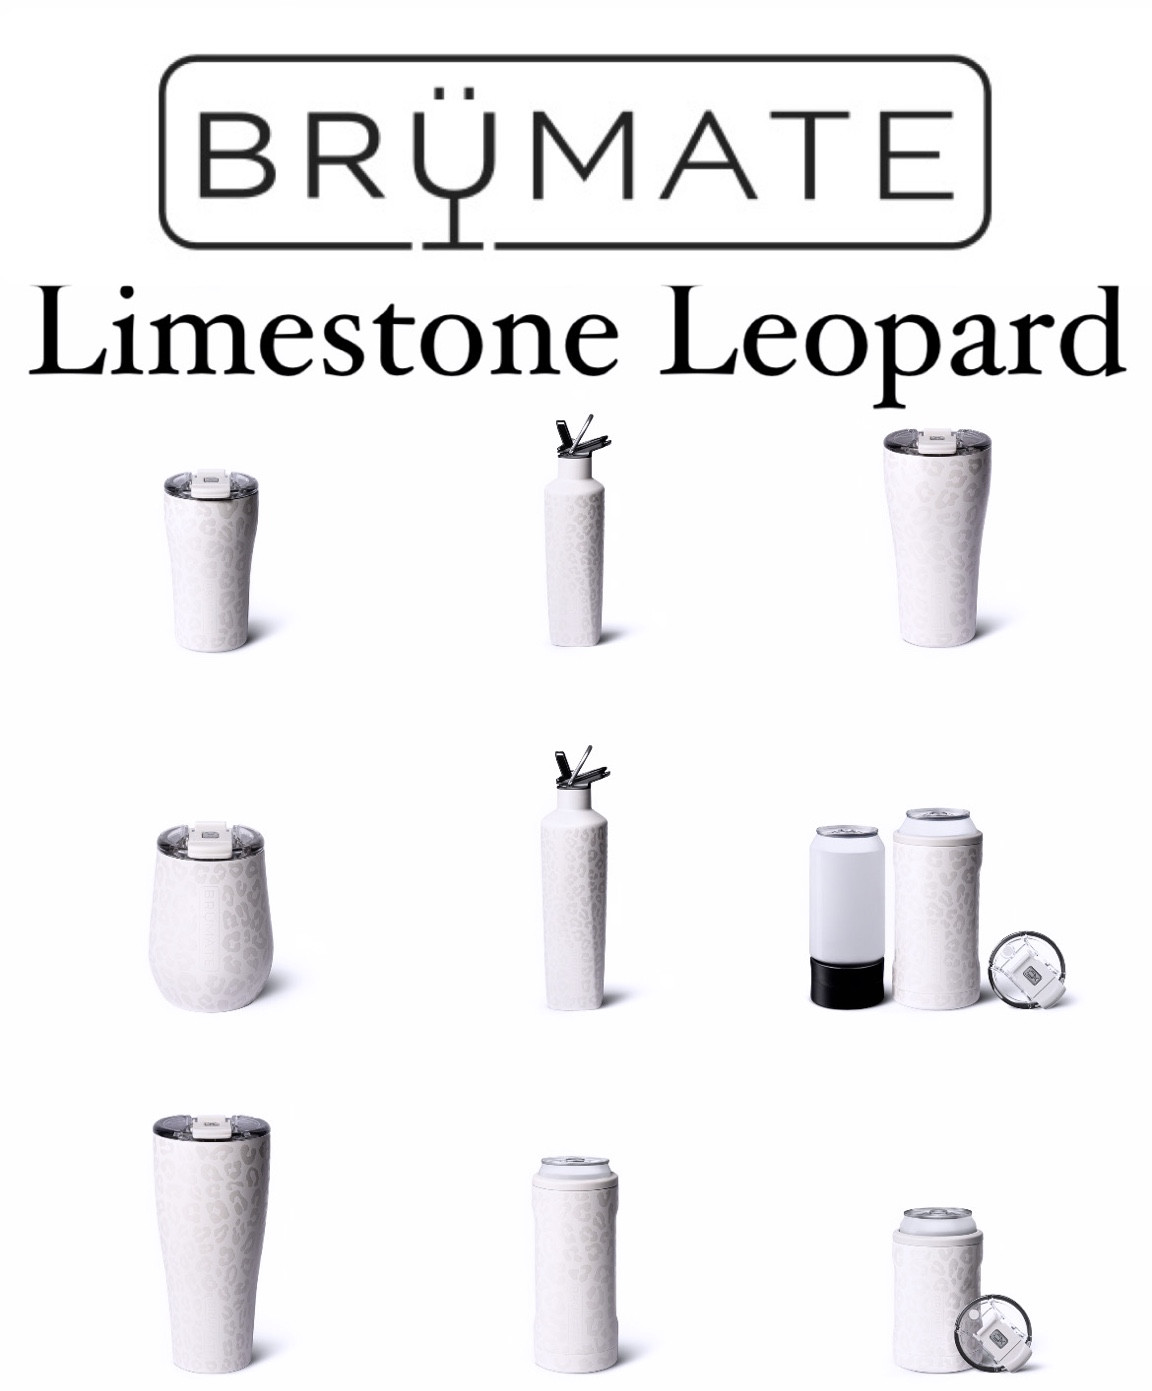 Brumate Limestone Leopard Collection – Knot Too Shabby-Amelia